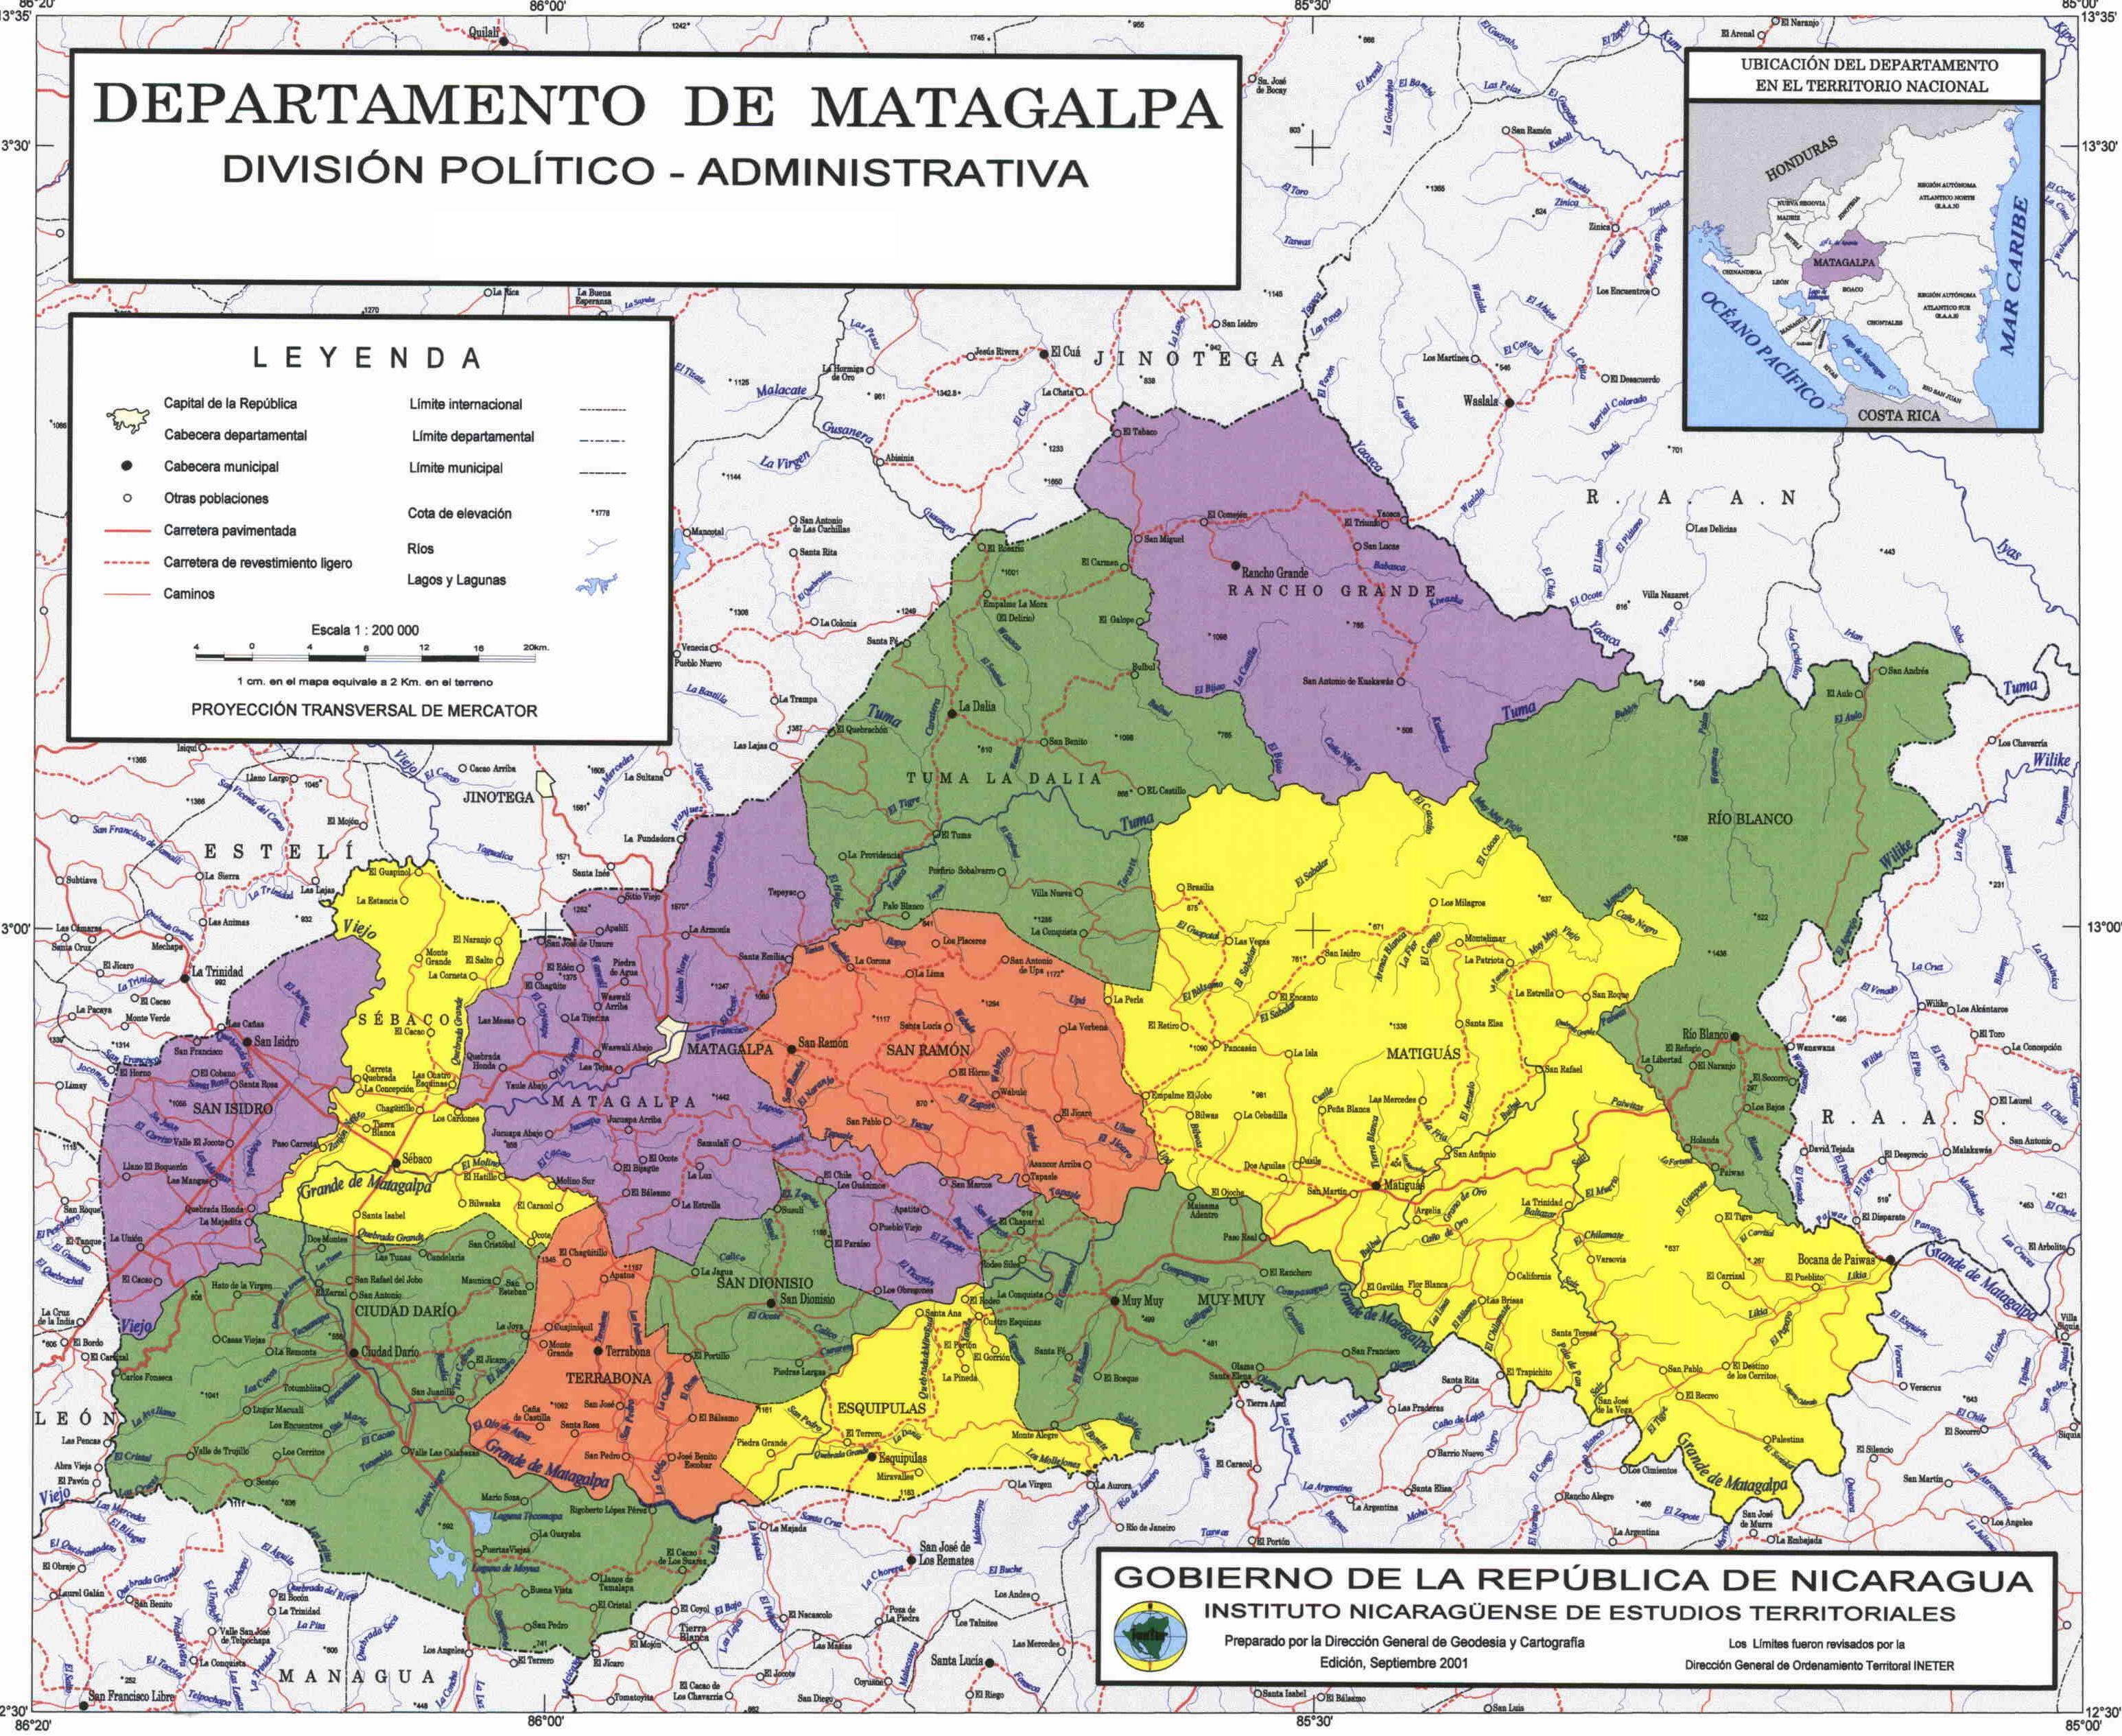 Matagalpa Department Administrative Political Map, Nicaragua